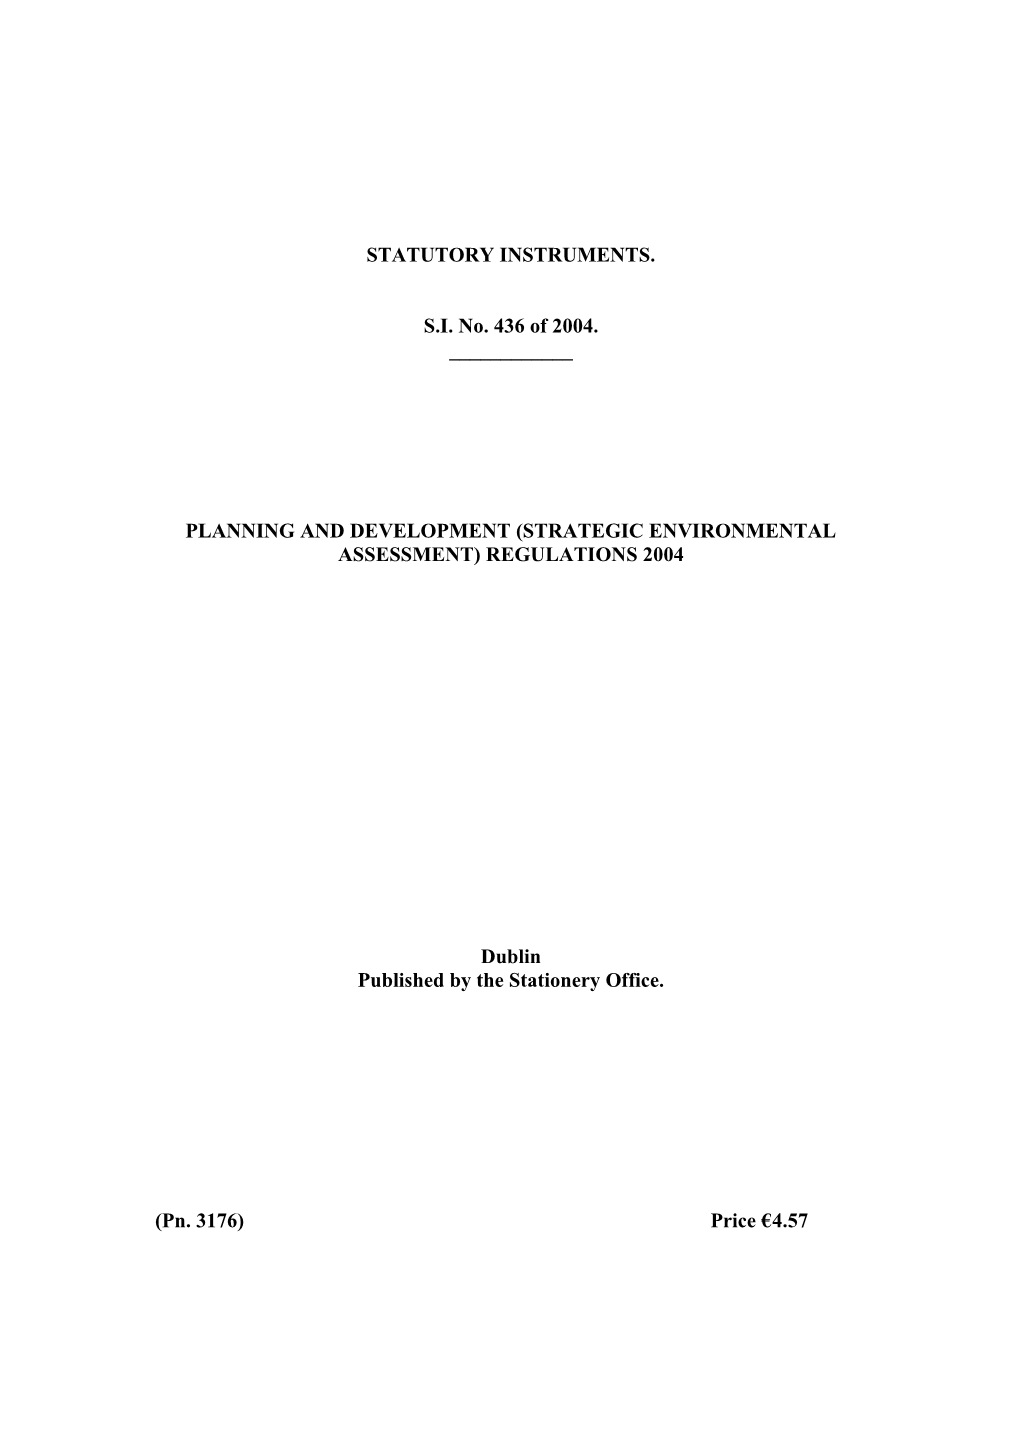 Planning and Development (Strategic Environmental Assessment) Regulations 2004